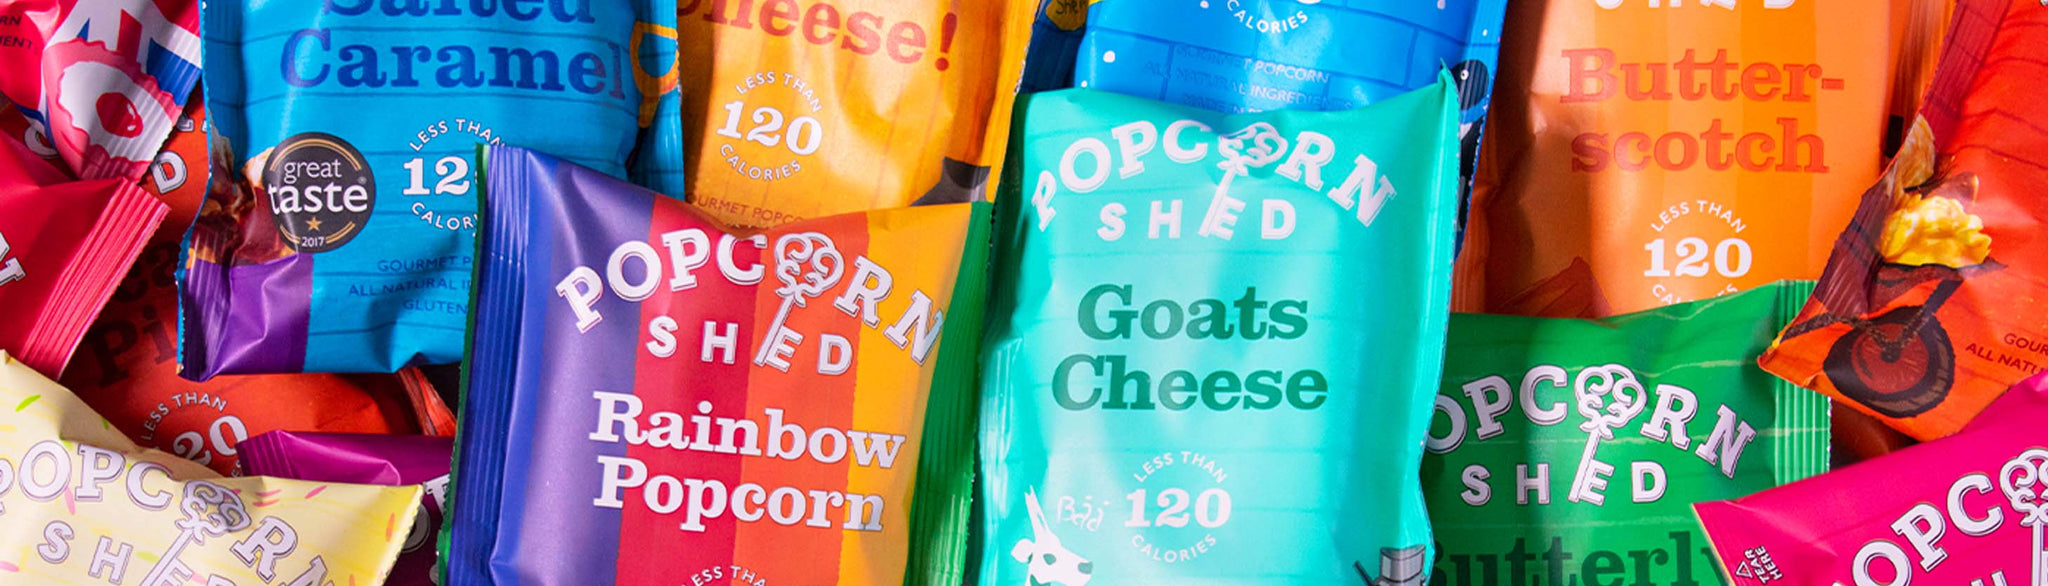 Gourmet Popcorn Snack Packs Popcorn Shed